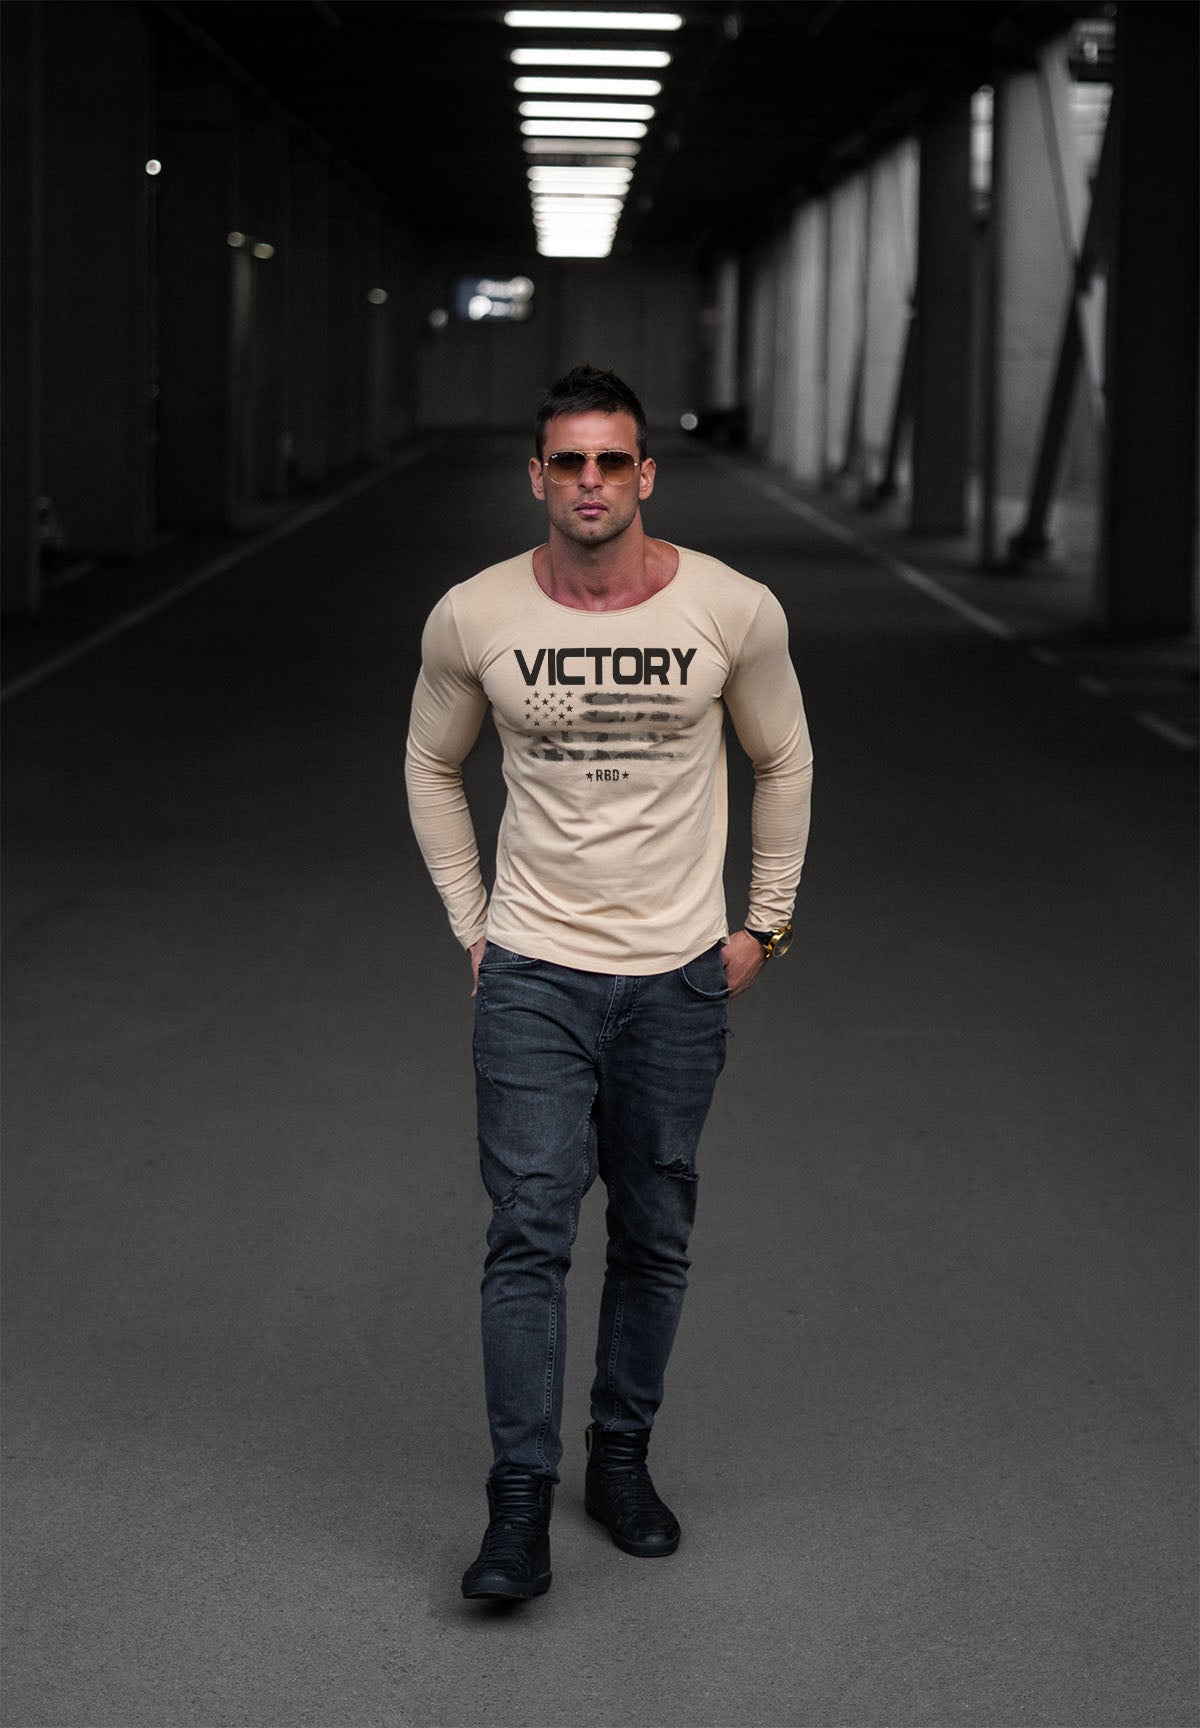 Mens Long Sleeve T-shirt "Victory" MD940